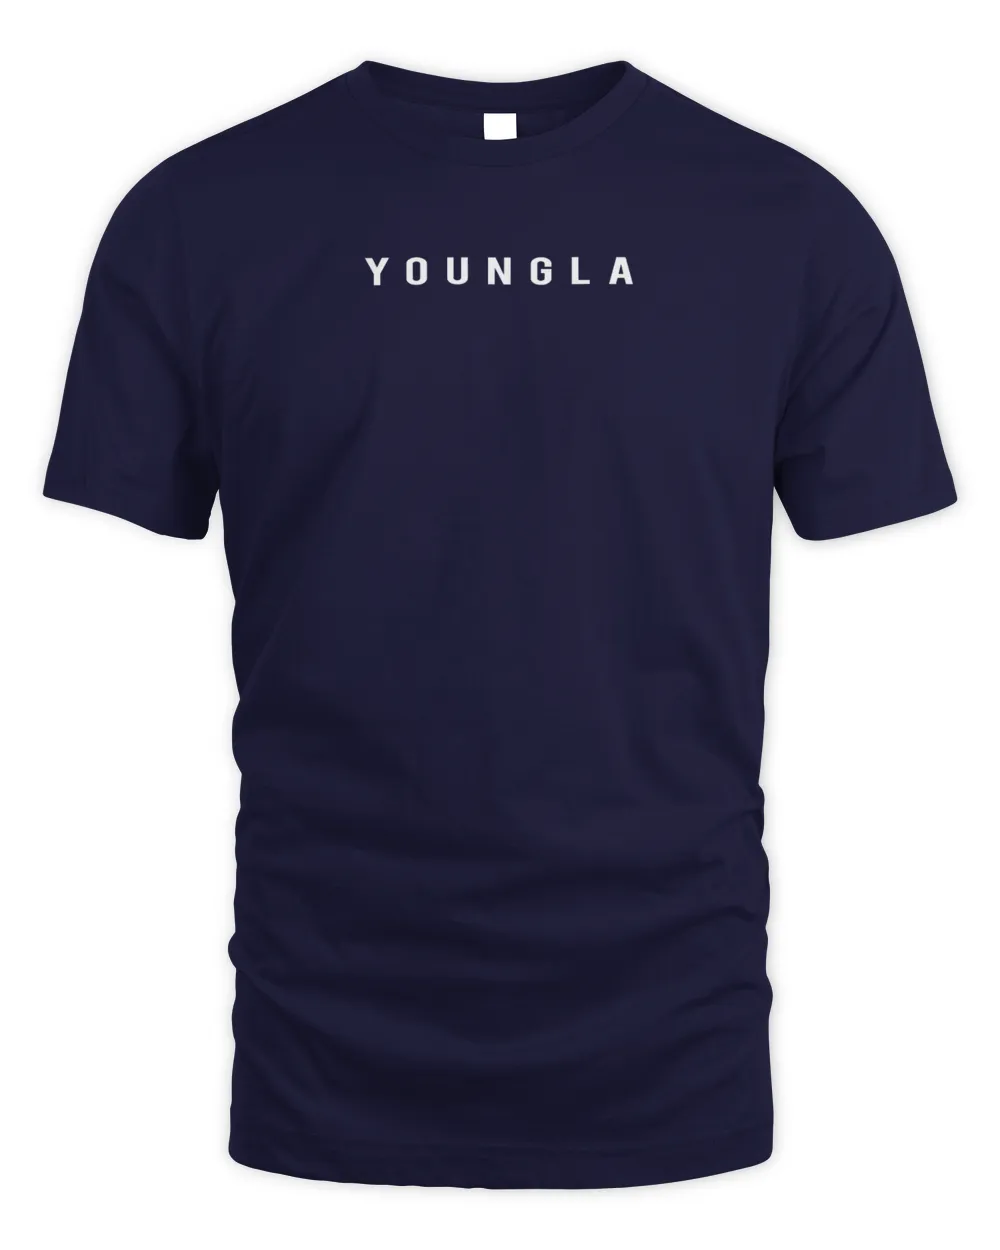 Youngla Compression Shirt